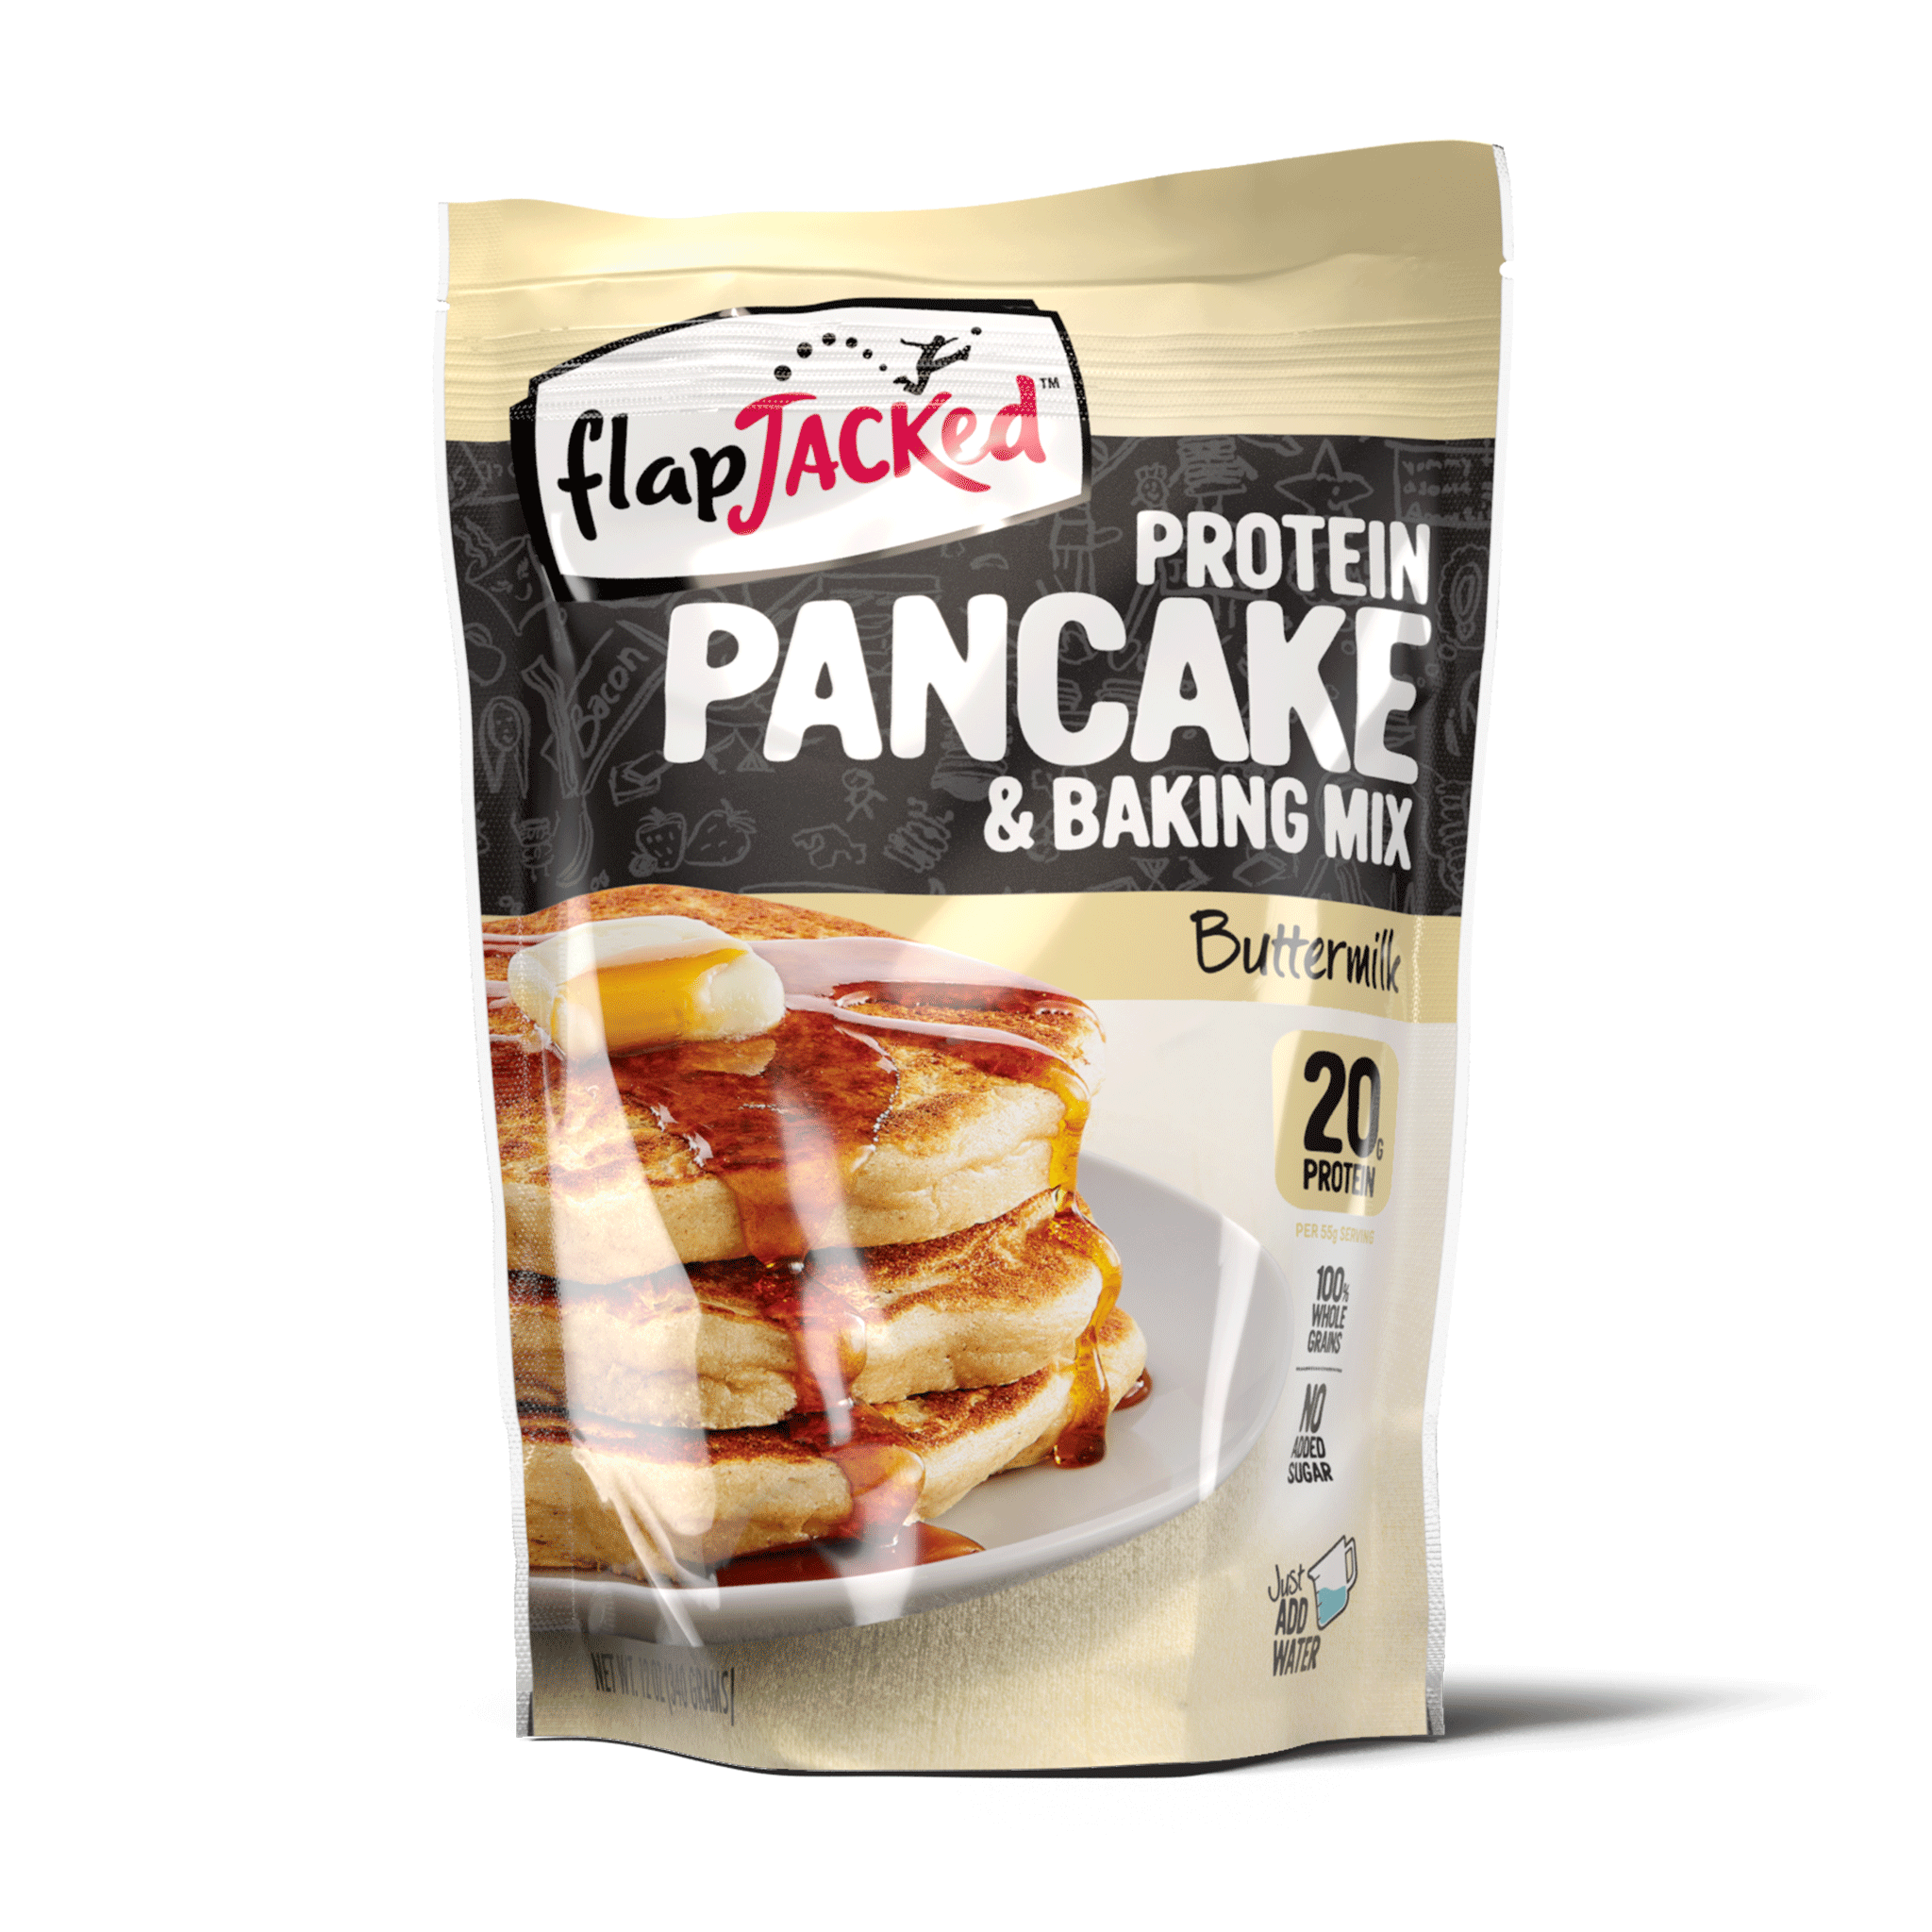 FlapJacked Buttermilk Protein Pancake & Baking Mix